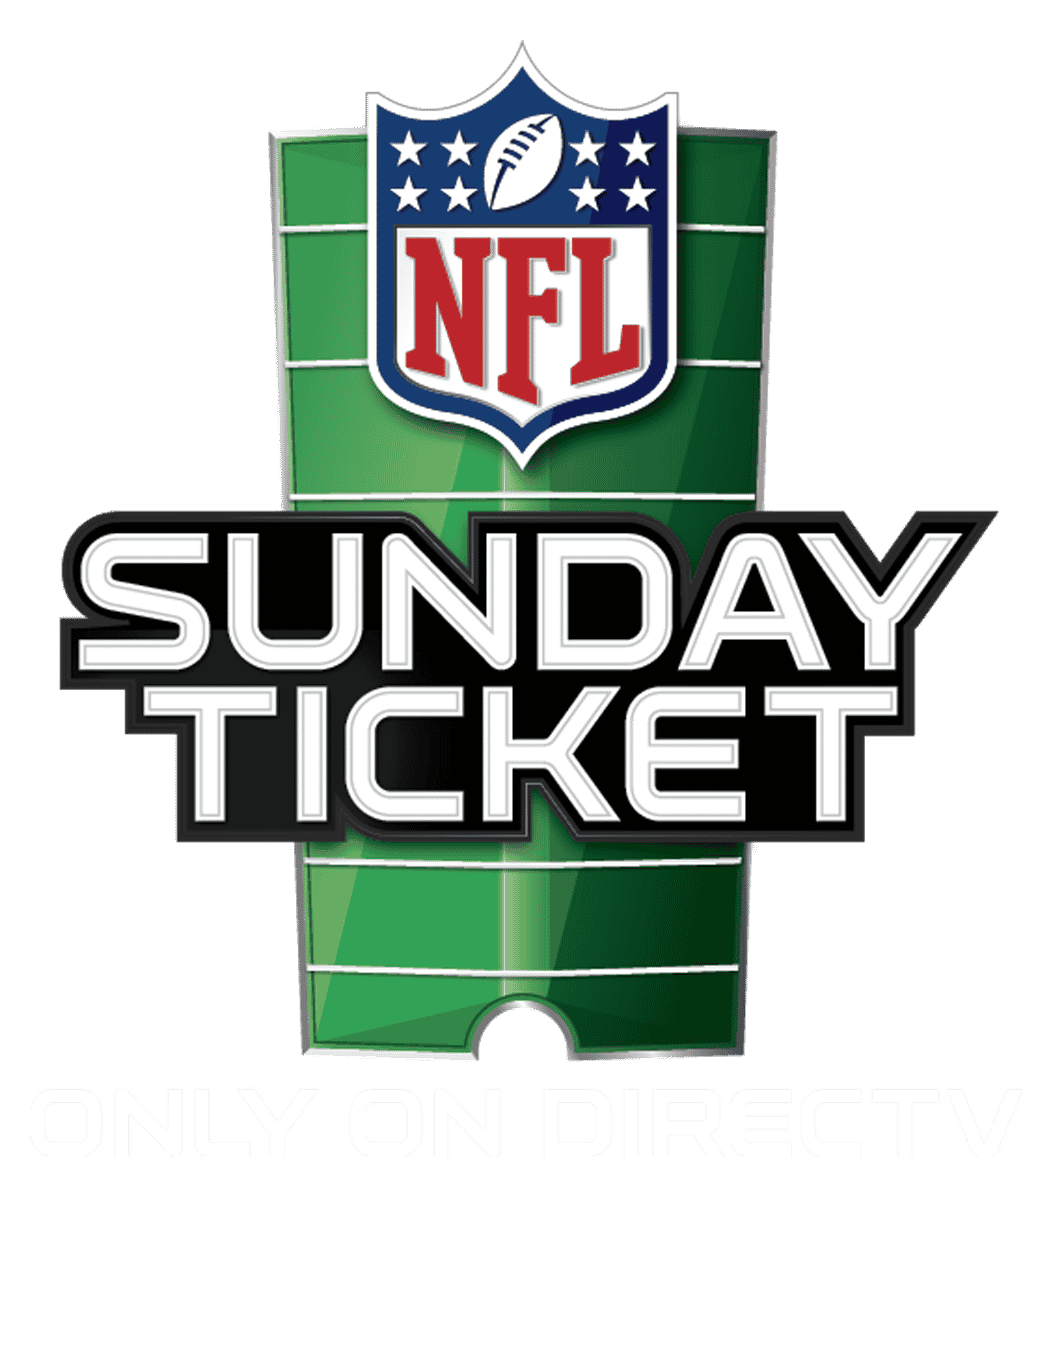 directv stream with nfl sunday ticket